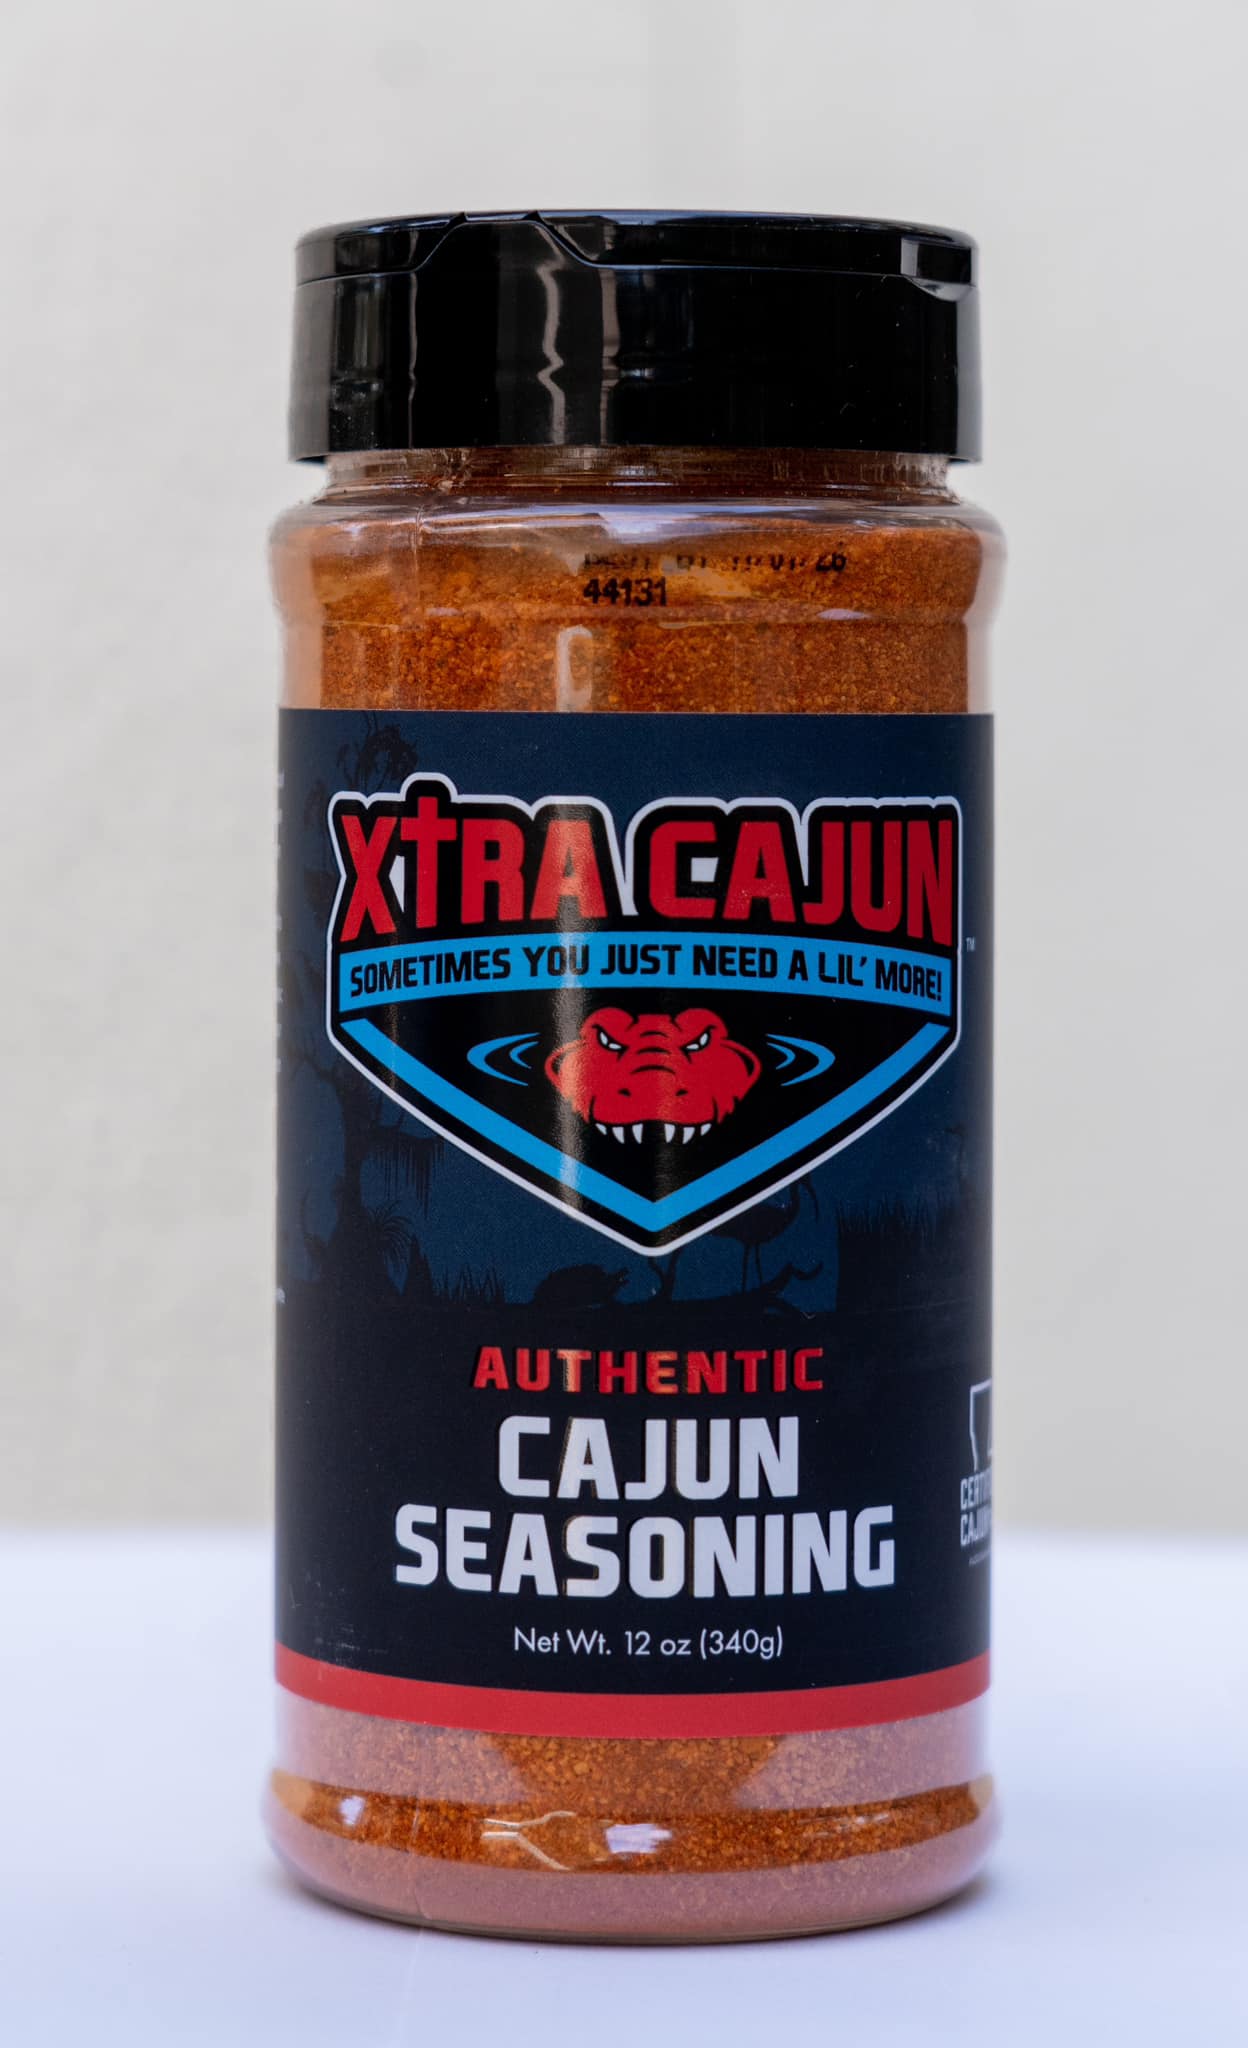 Xtra Cajun - Cajun Seasoning